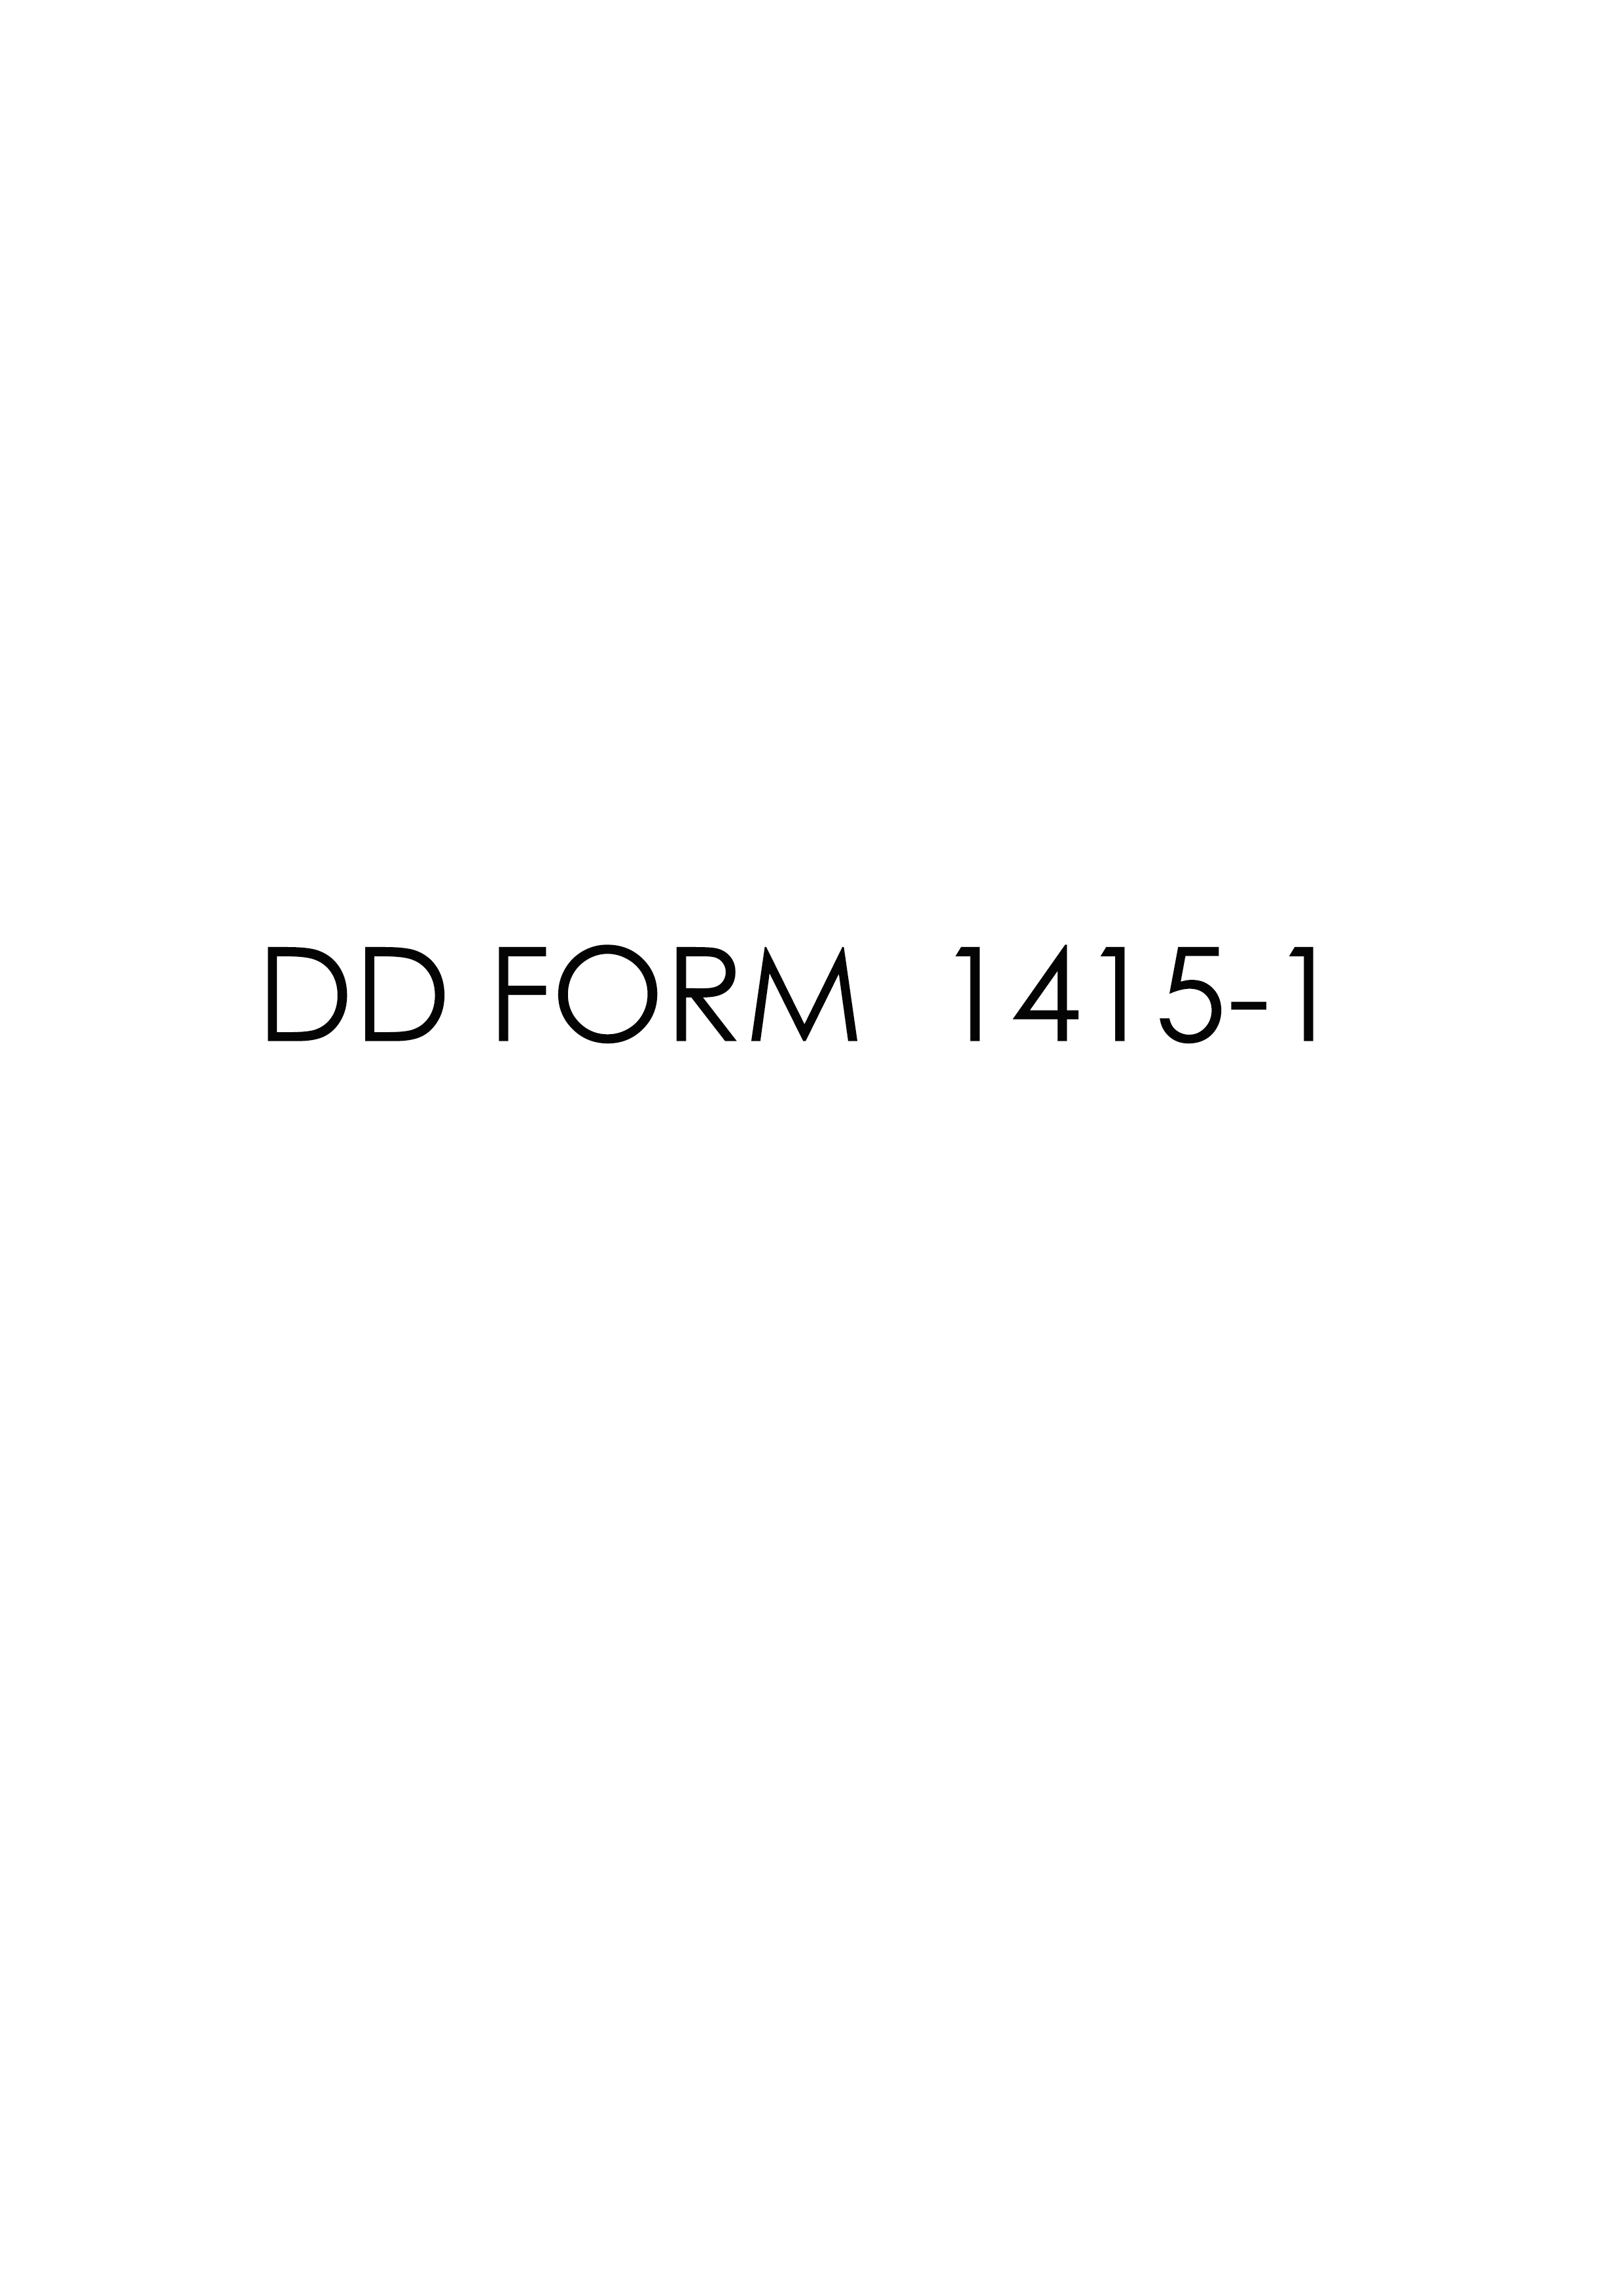 Download dd 1415-1 Form